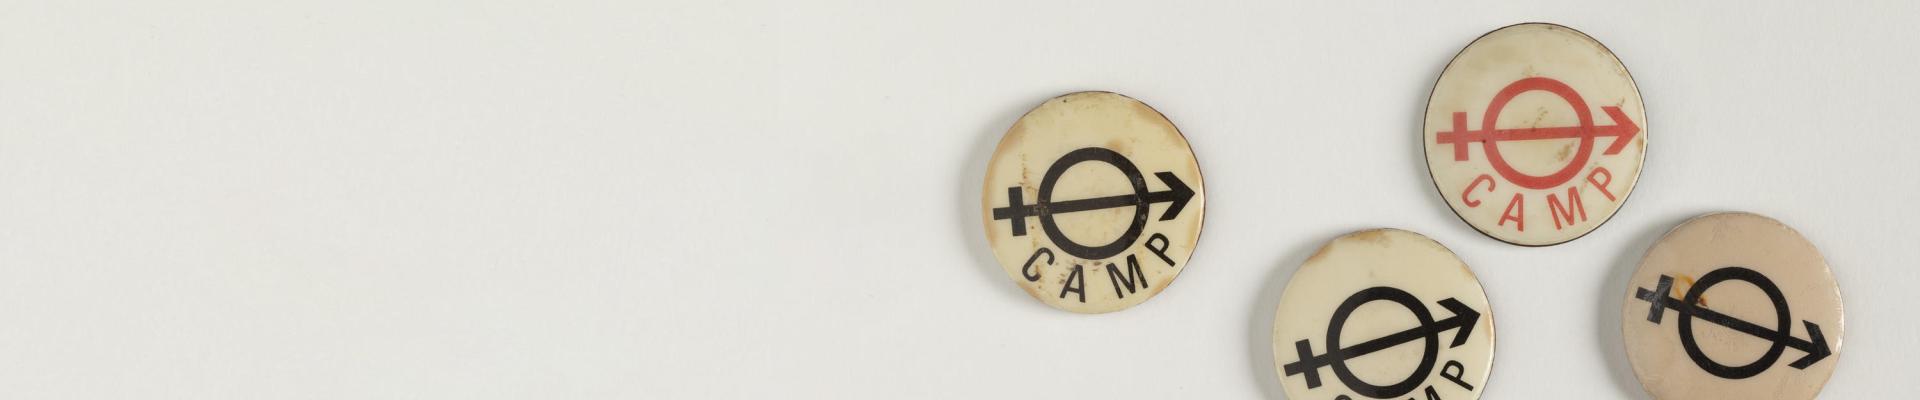 CAMP membership badges, c 1973, Alexander ‘Lex’ Watson collection